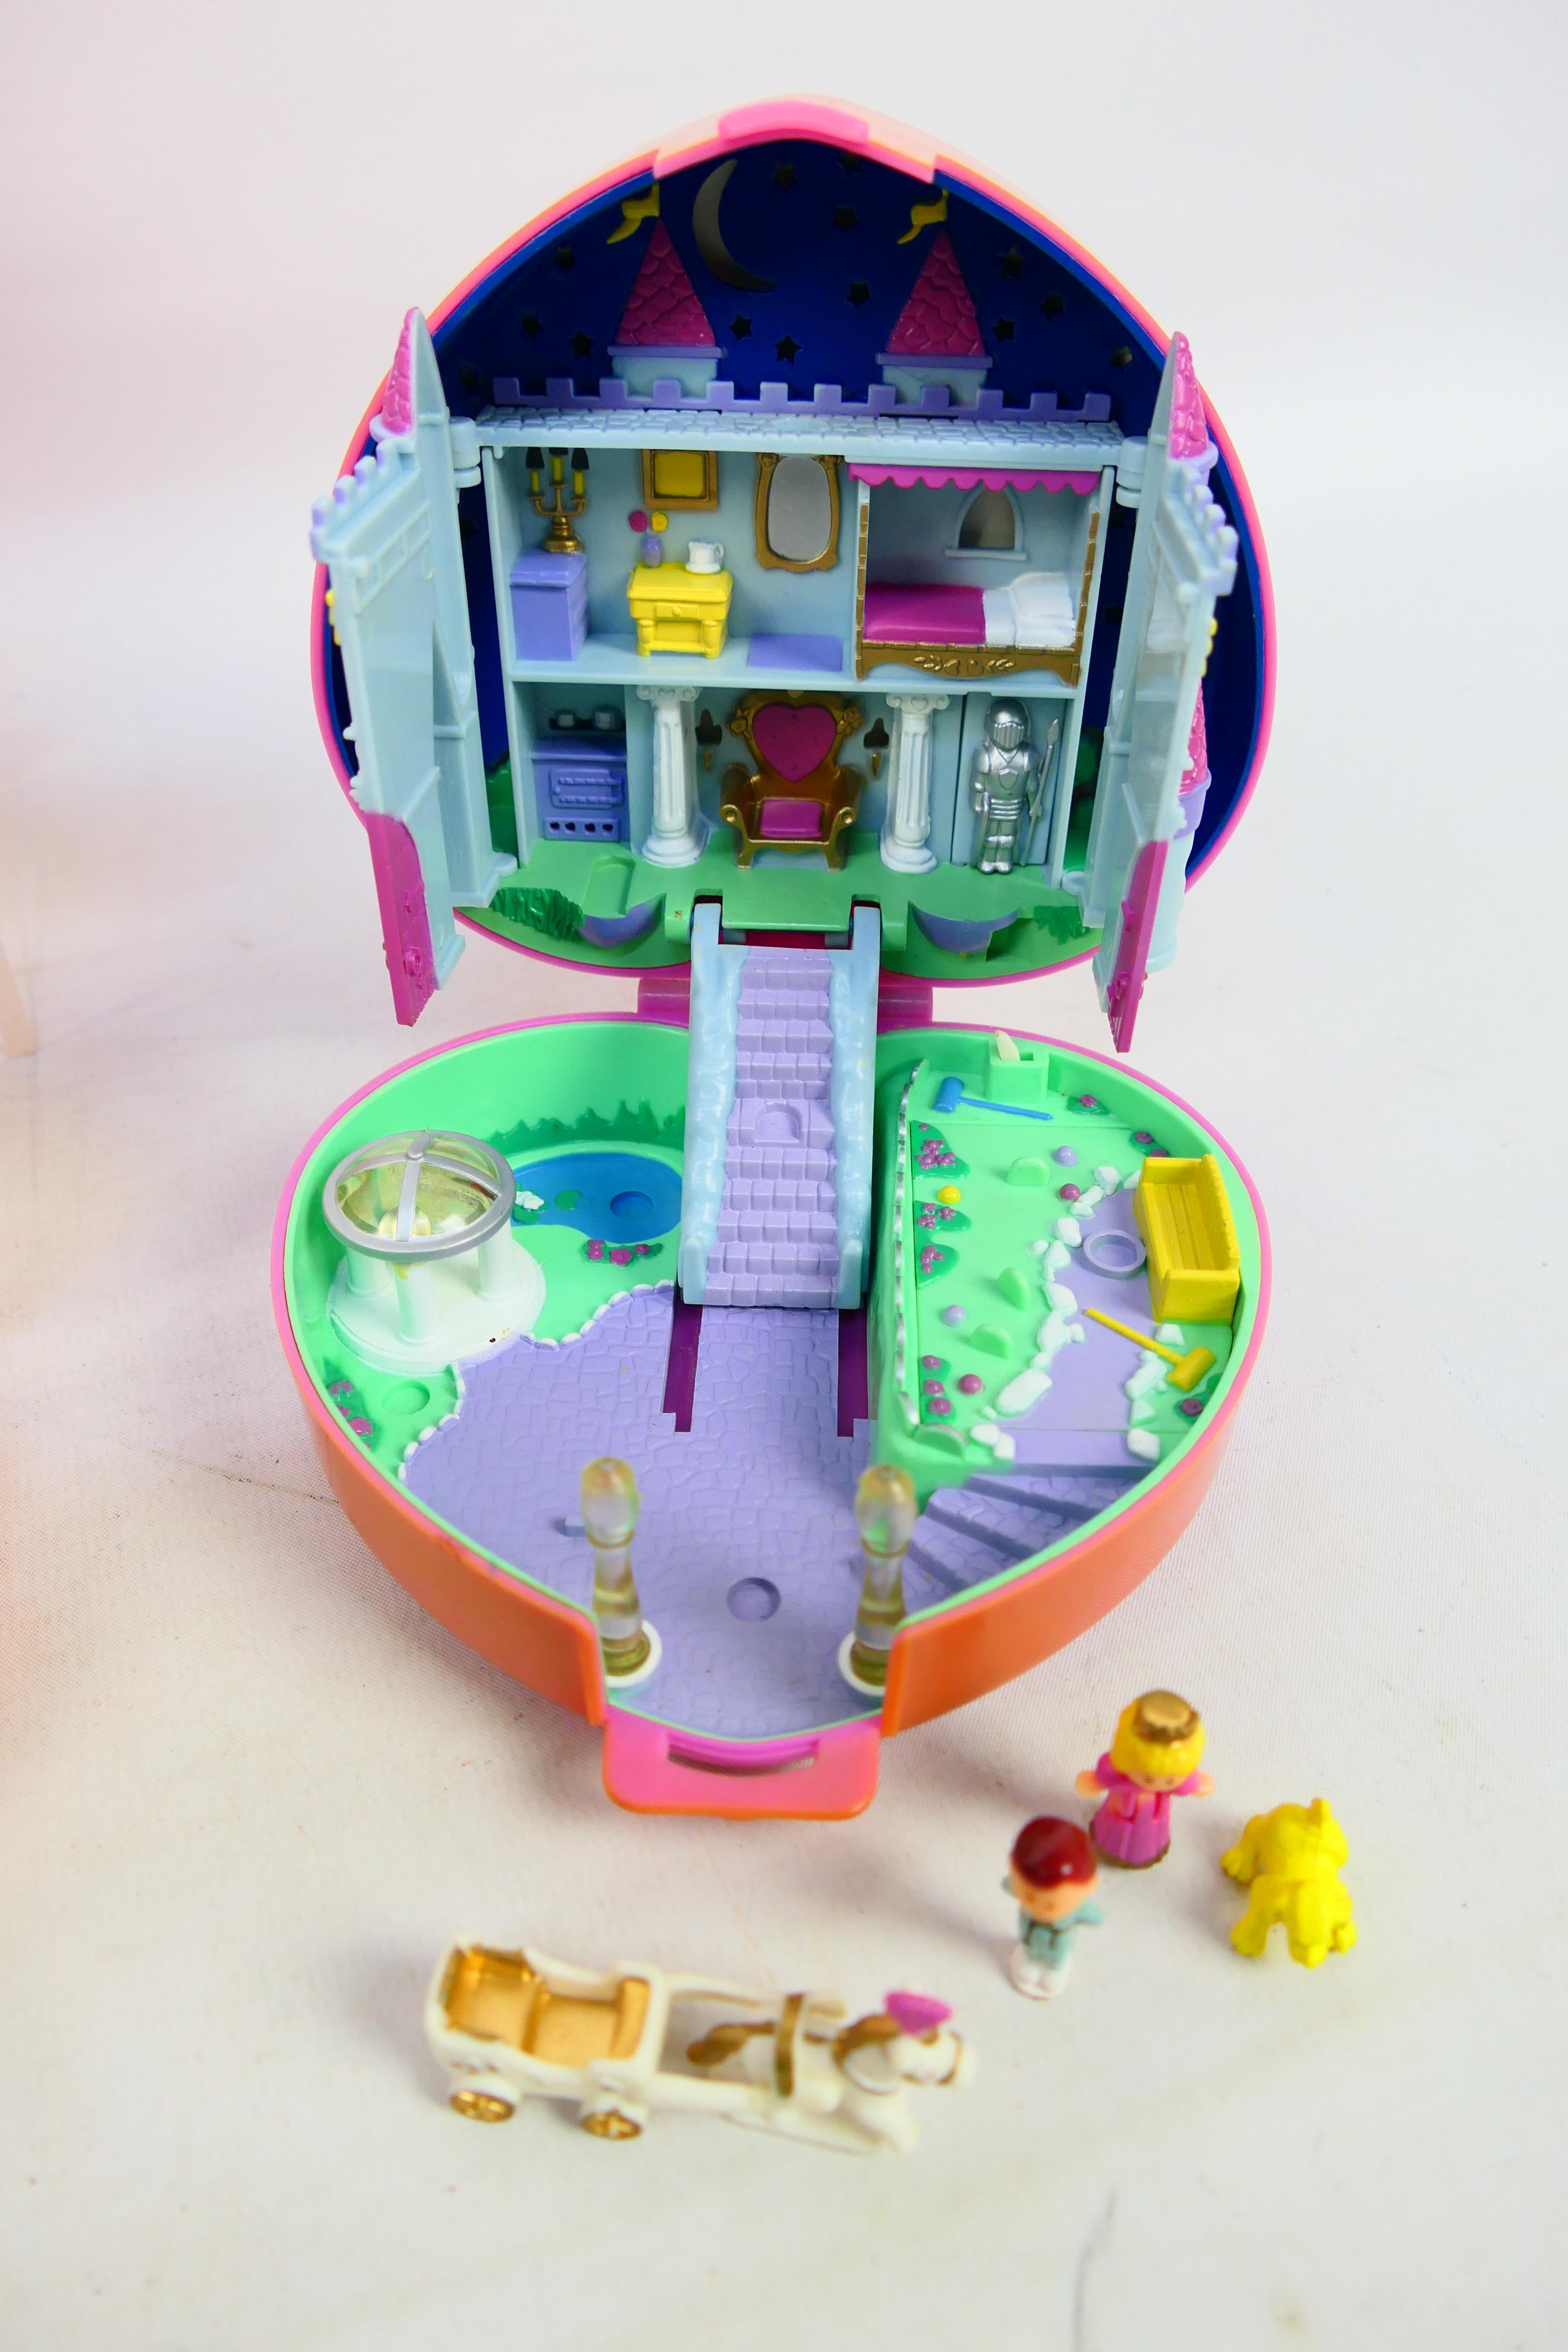 Bluebird Toys - Polly Pocket - Vivid Imaginations - Polly Pocket Tammy's Palm Tree Island, - Image 5 of 11